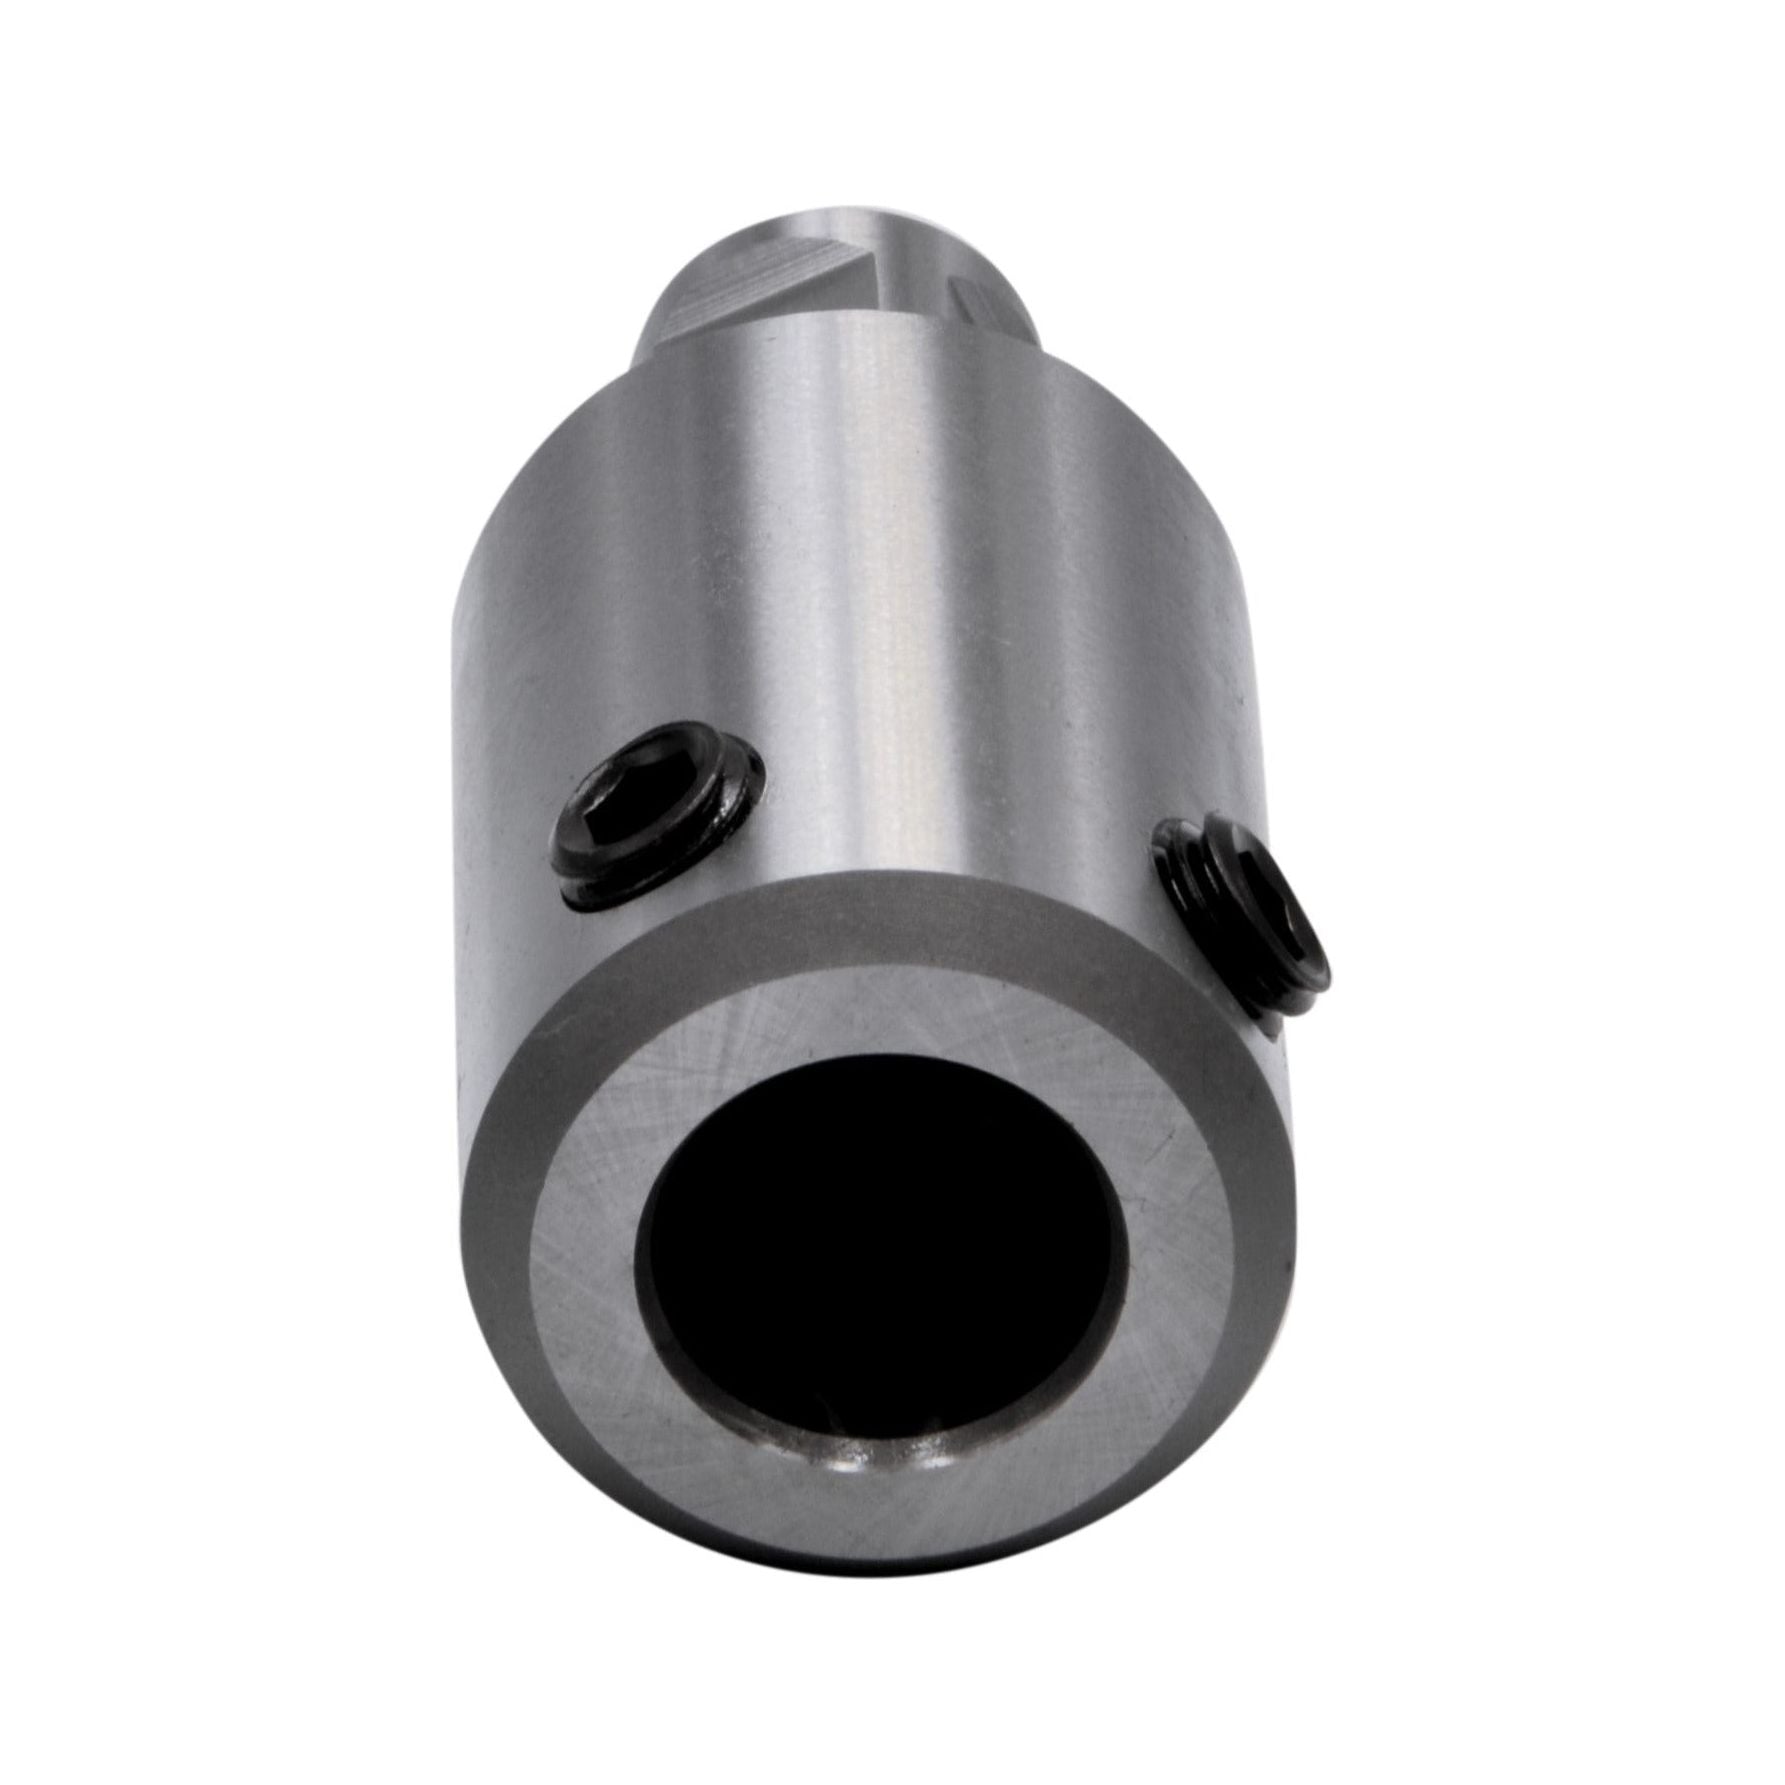 50 mm Annular Cutter Extension Socket with Universal Weldon Shank